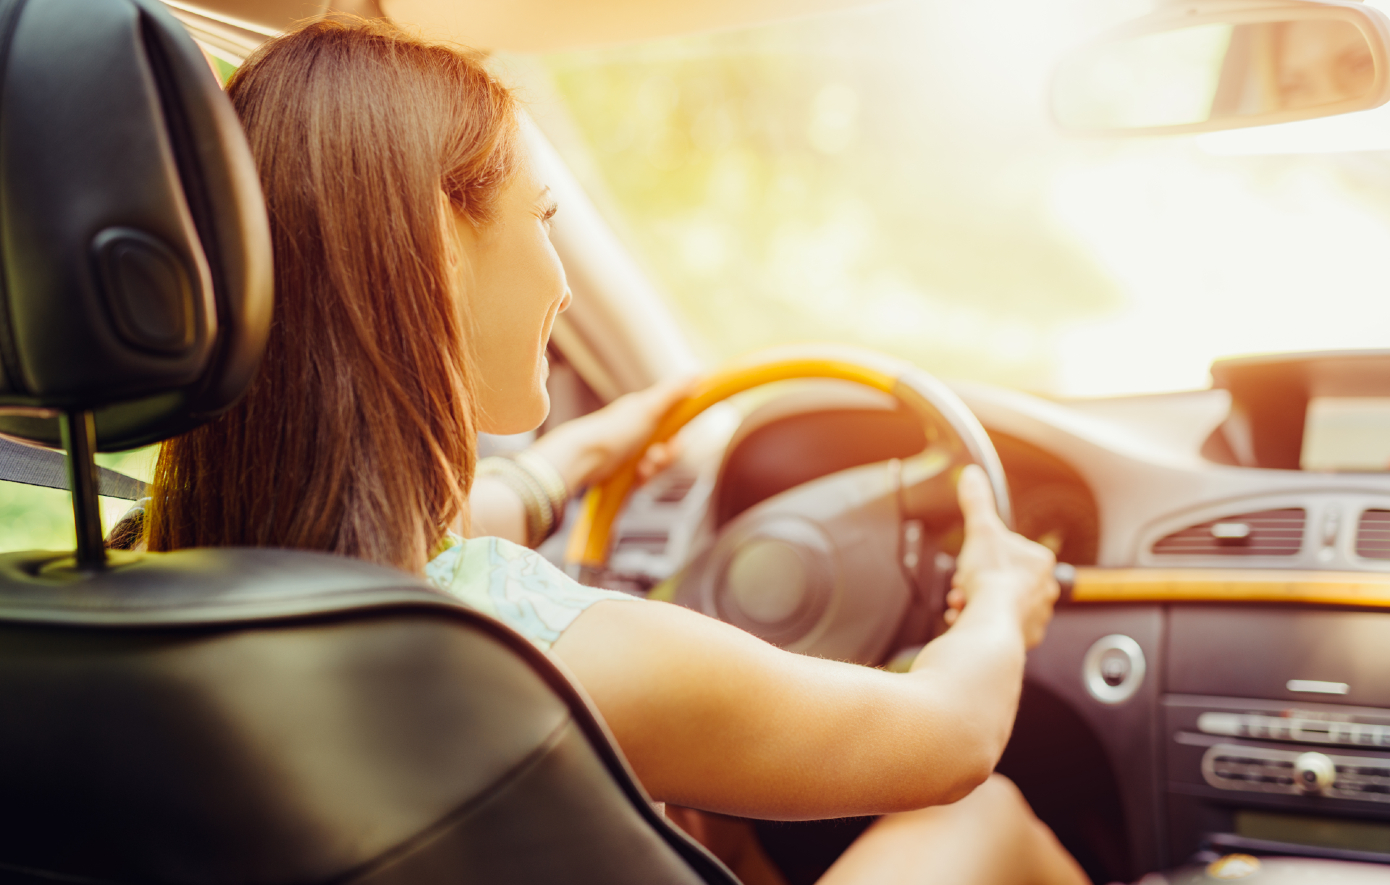 H «μυρωδιά του καινούργιου» στα αυτοκίνητα μπορεί να είναι αποτέλεσμα καρκινογόνων ουσιών